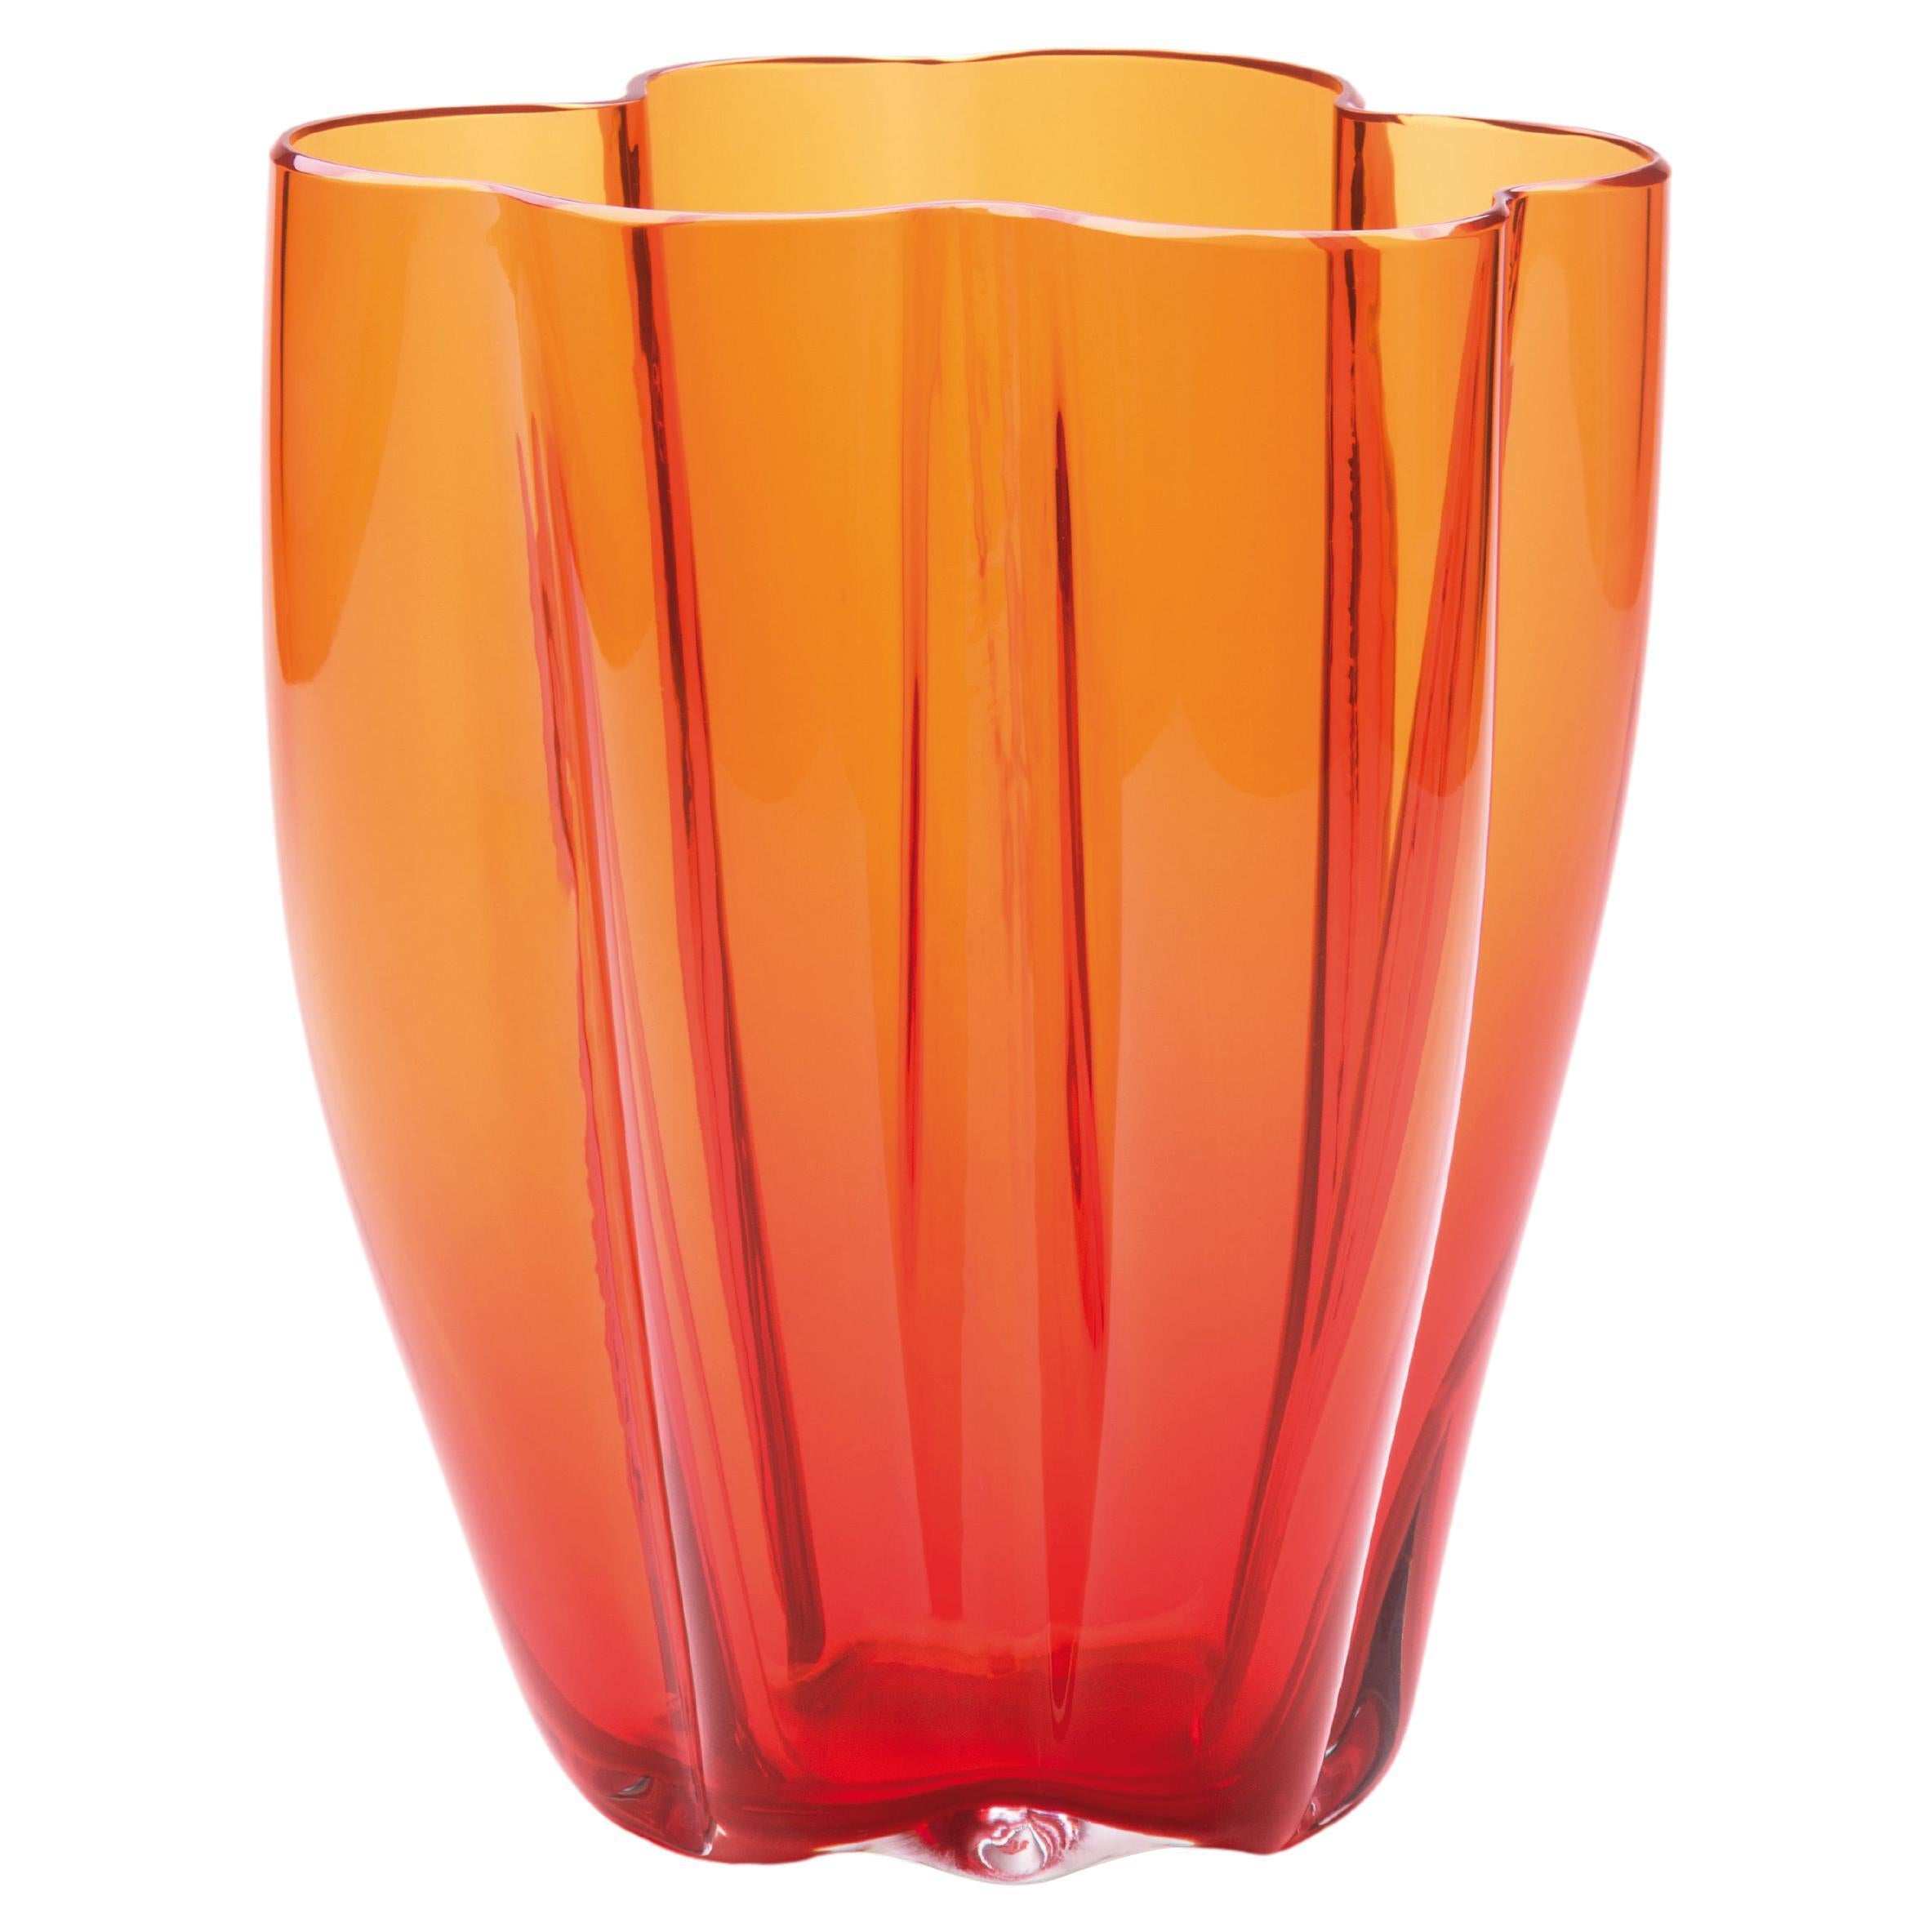 Petalo Orange Large Vase by Purho For Sale